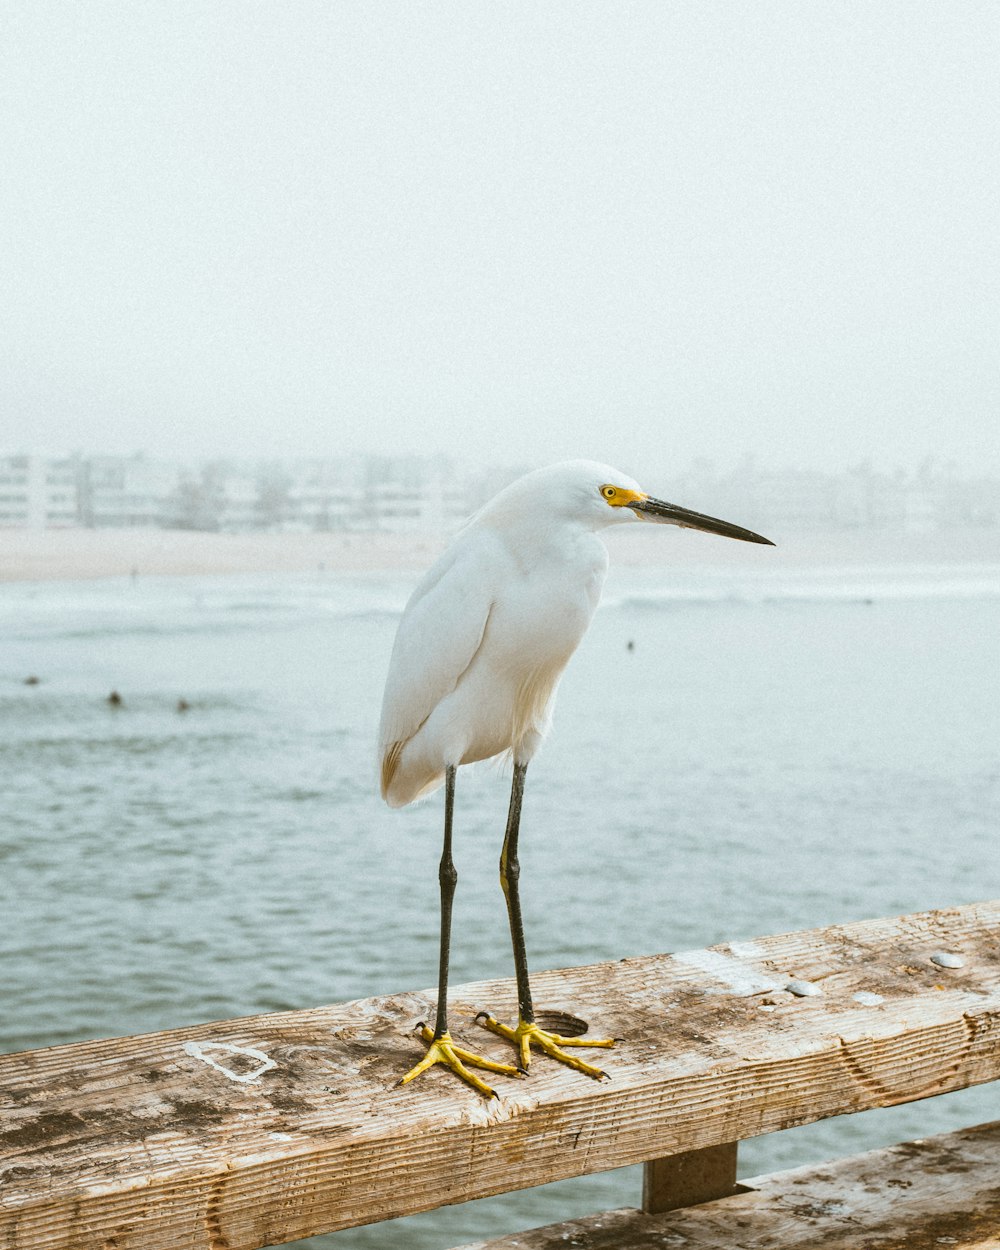 a white bird standing on a wooden pier